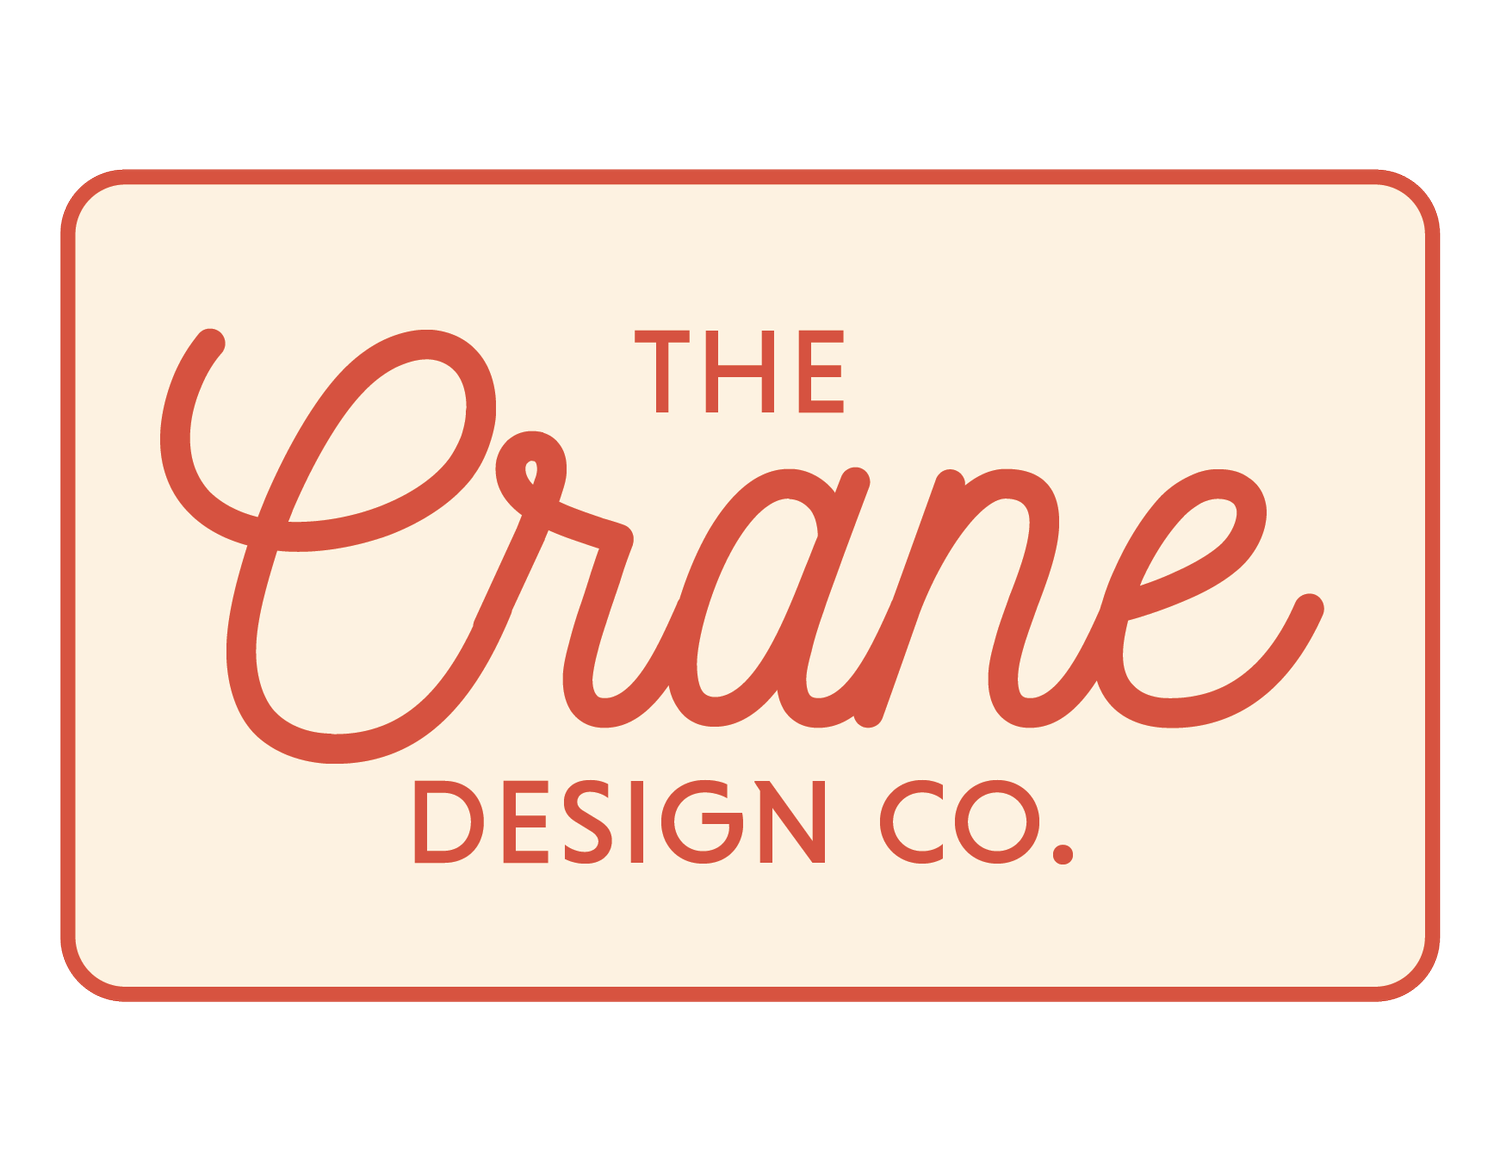 The Crane Design Co.